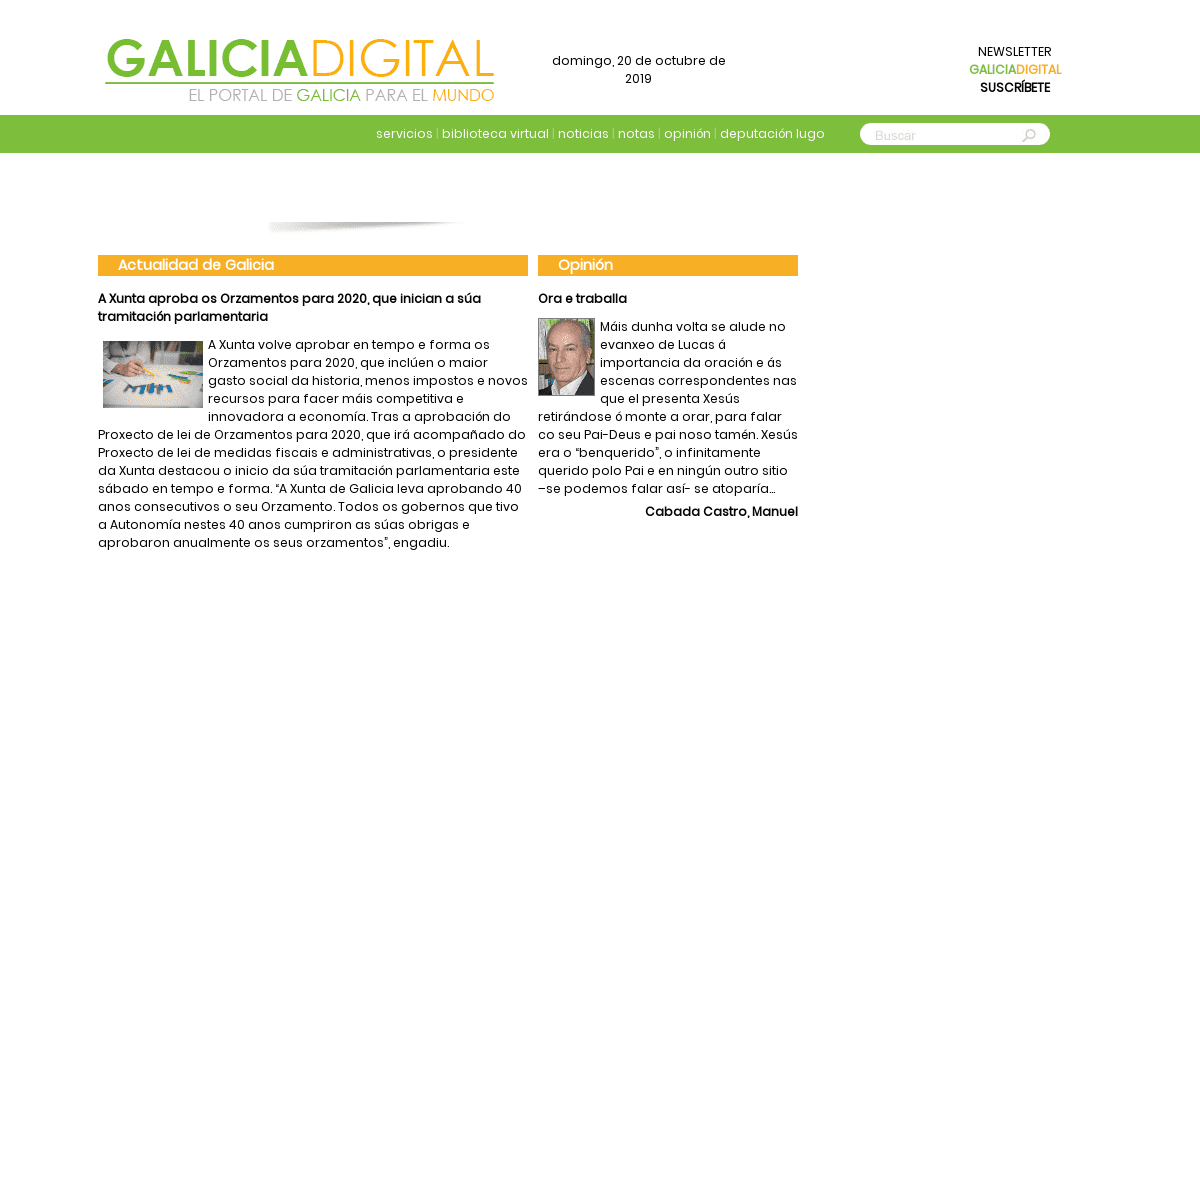 A complete backup of galiciadigital.com